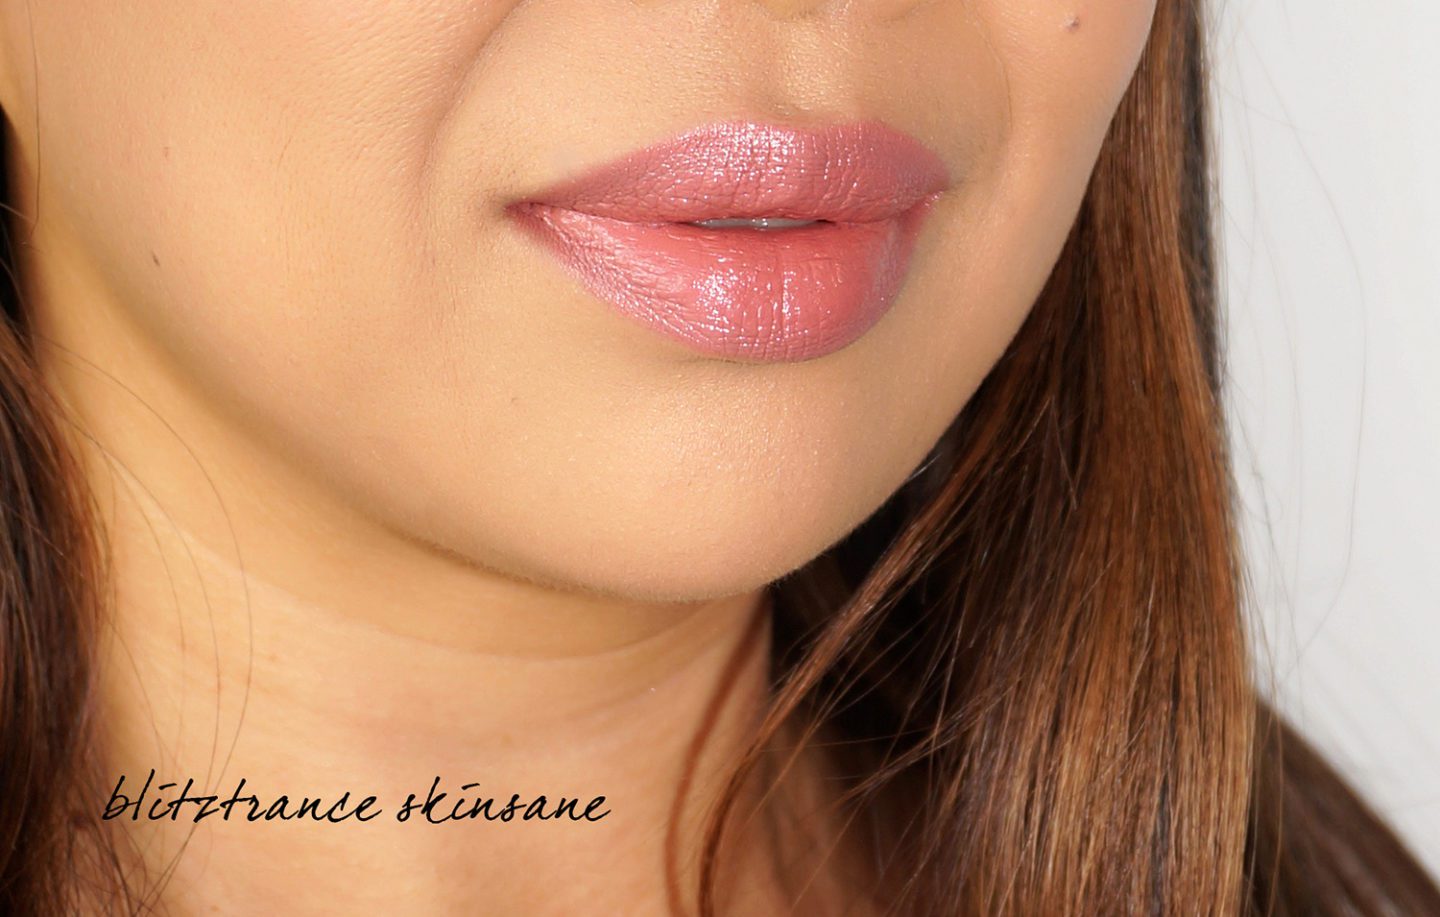 Pat McGrath BlitzTrance Lipstick Skinsane swatch | The Beauty Look Book